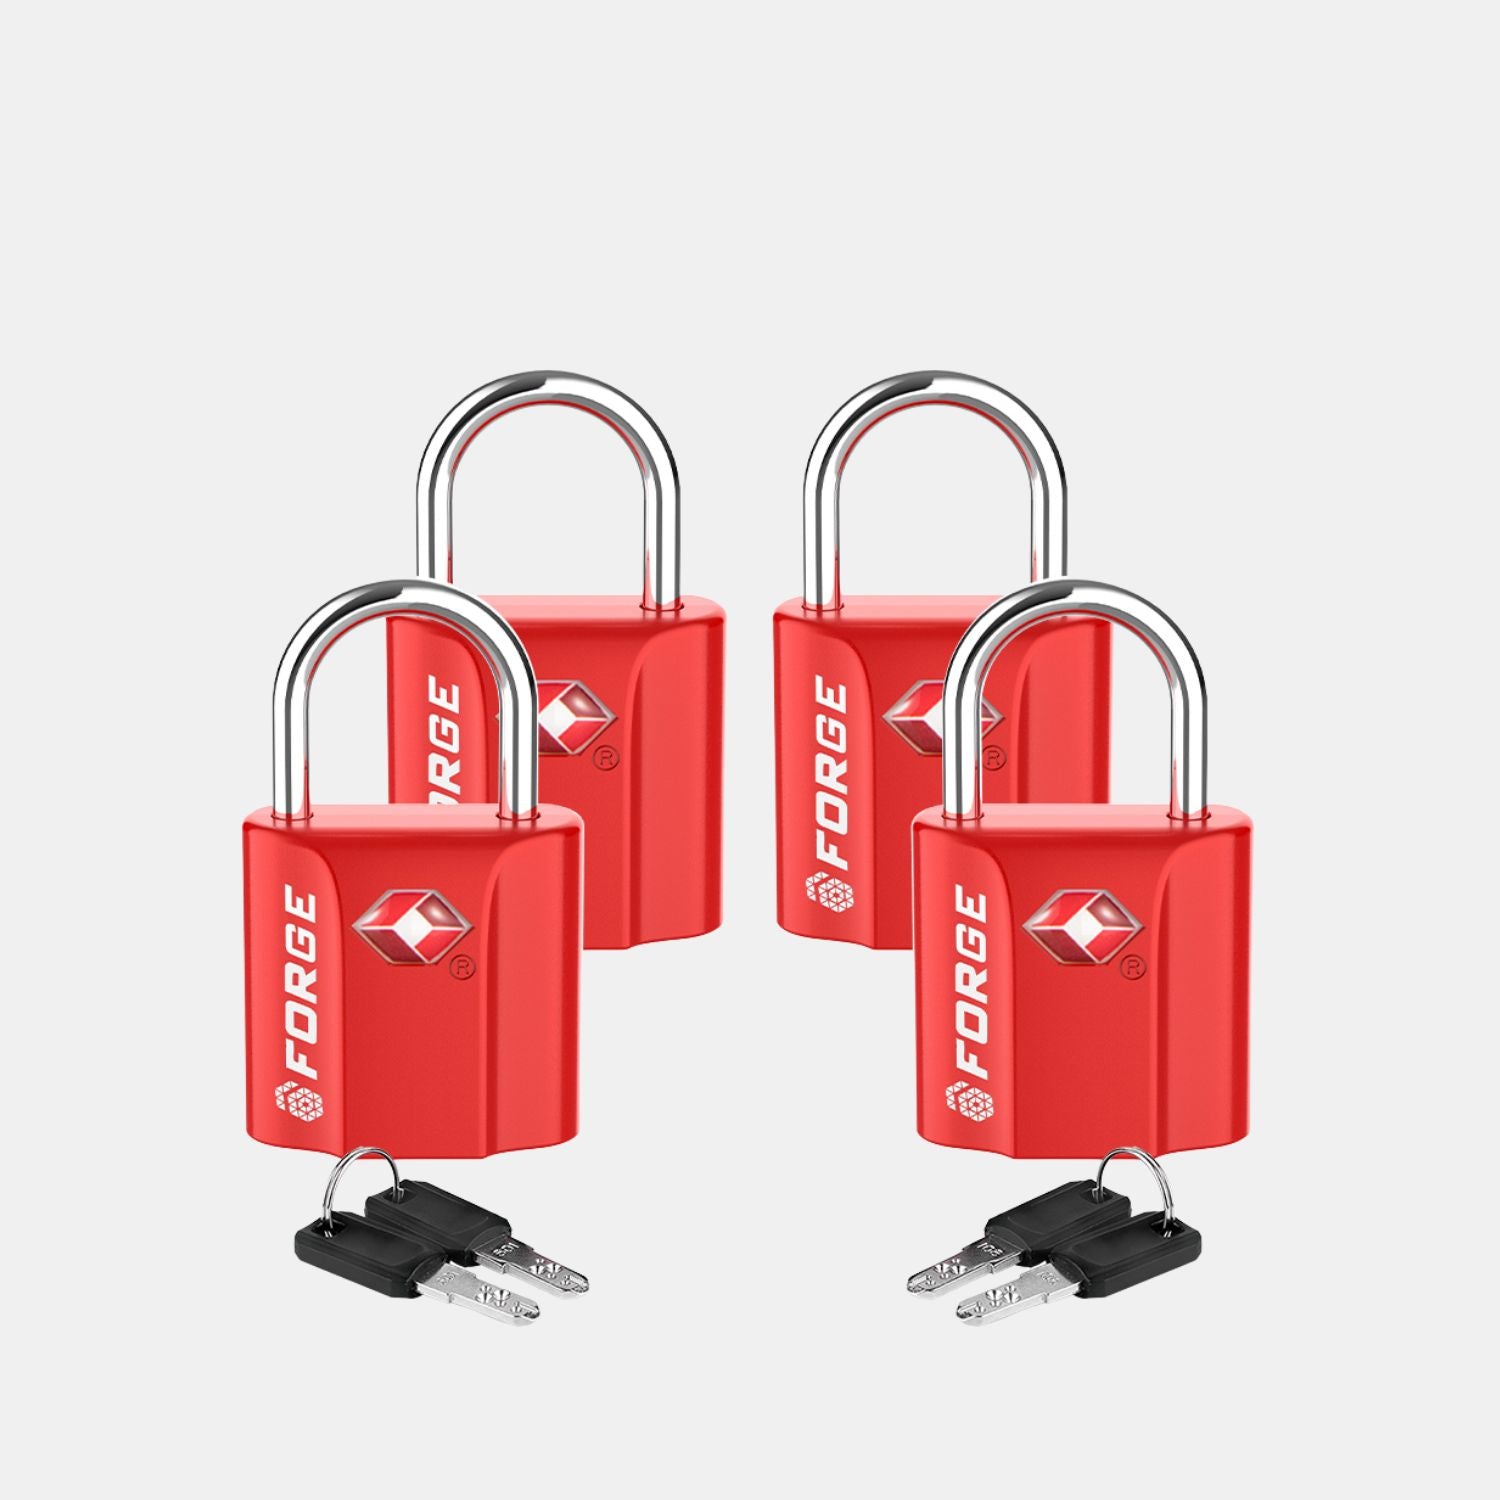 TSA Approved Dimple Key Luggage Lock - TSA006 Key, Ultra-Secure Small Size Lock. Red 4 Locks